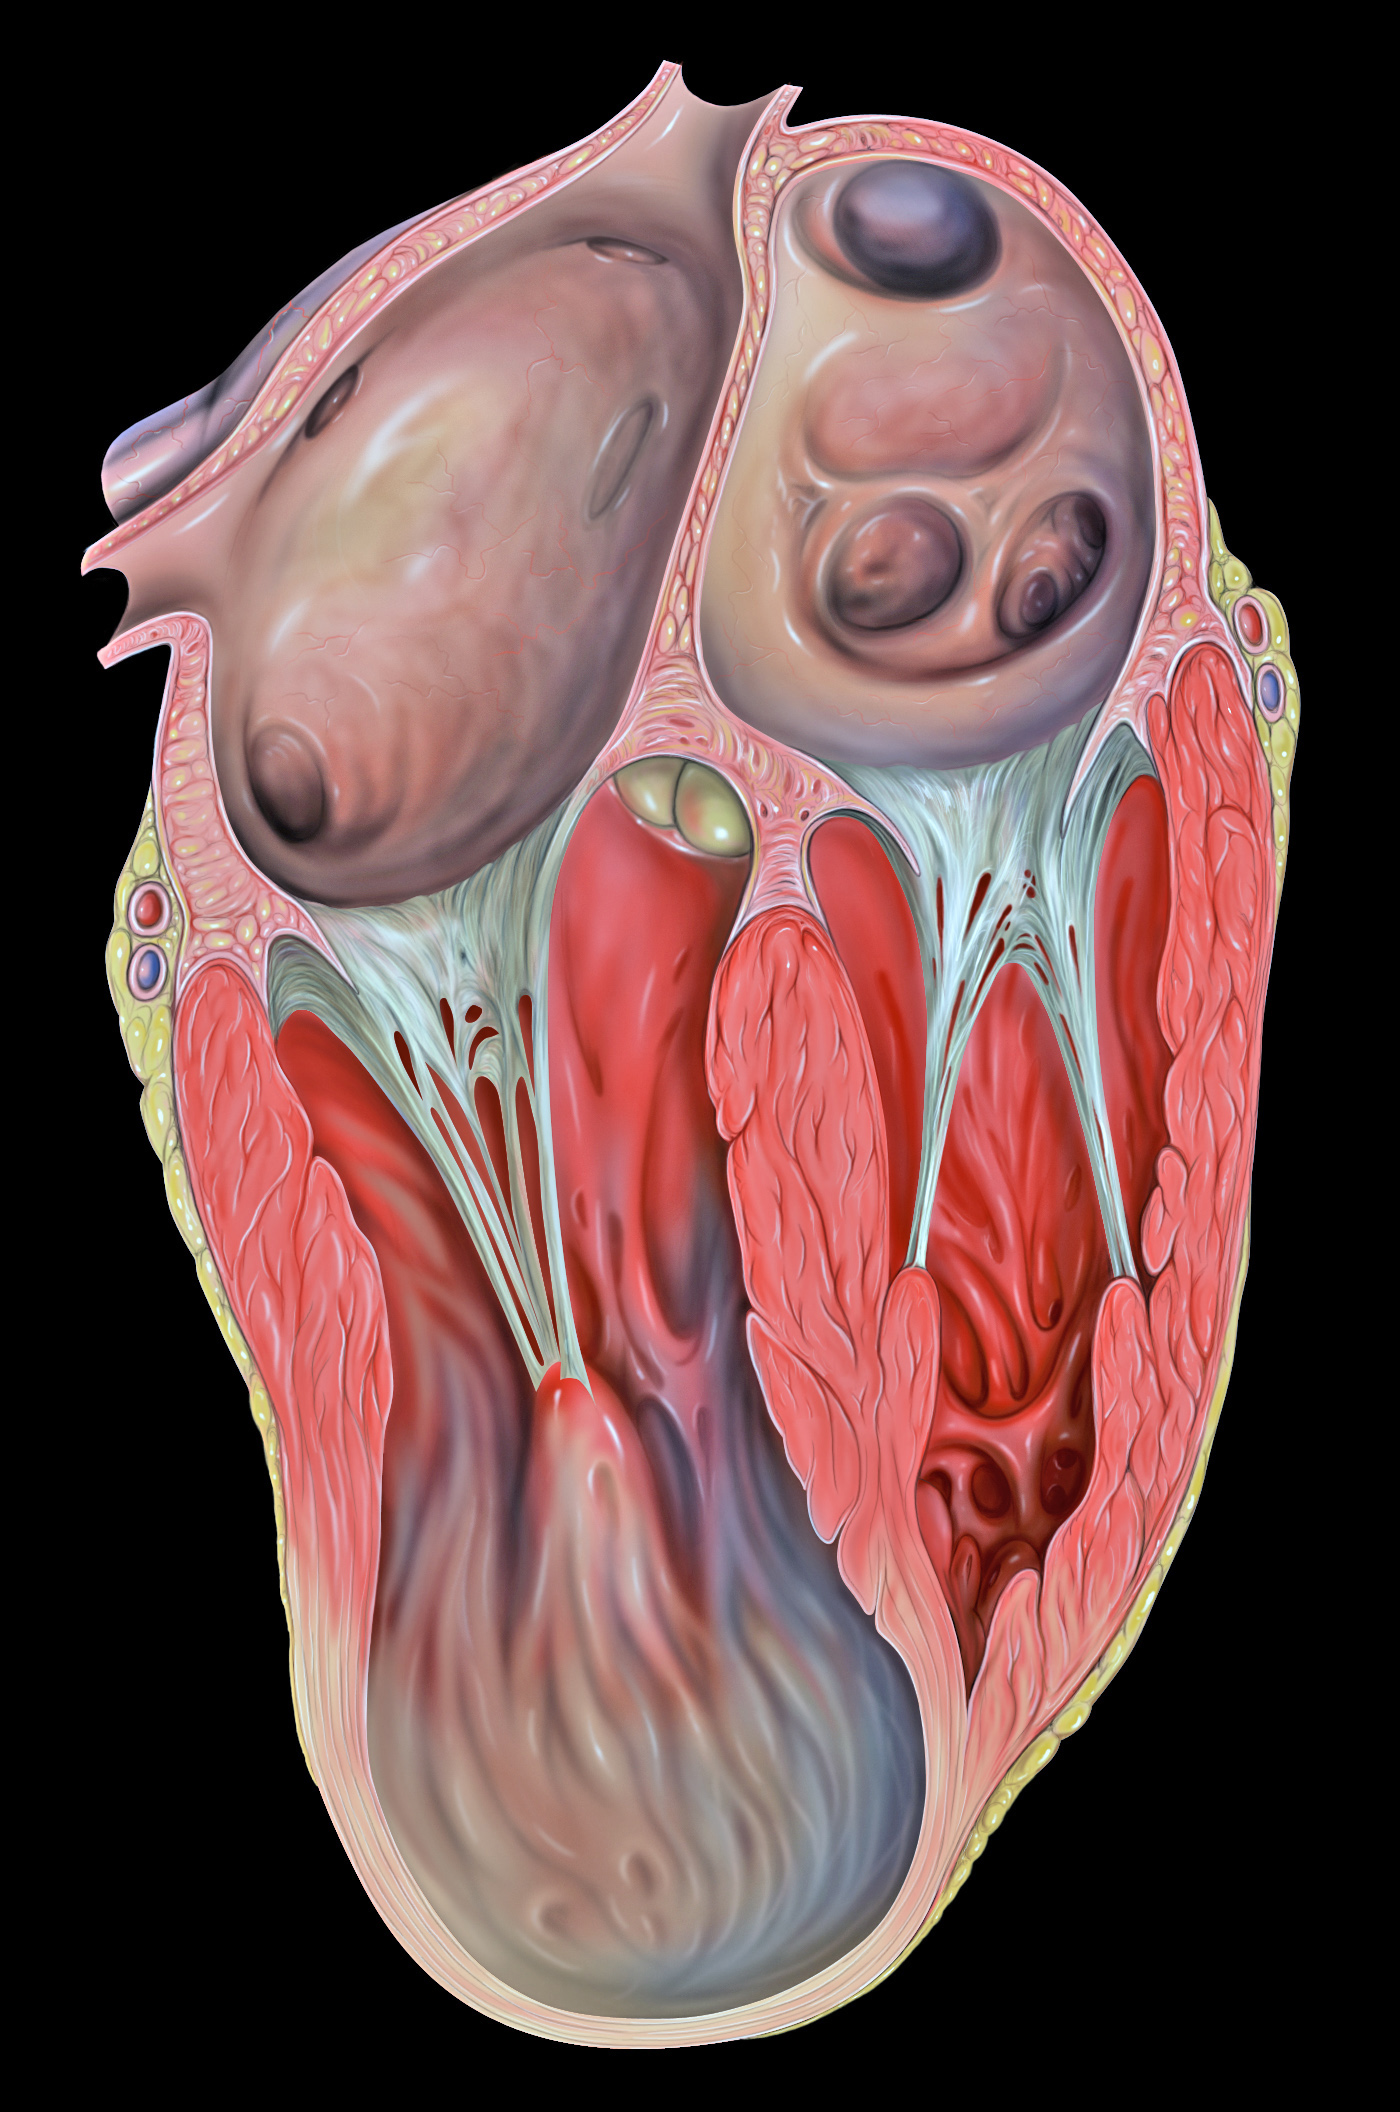 File:Heart lv aneurysm www.neverfullbag.com - Wikimedia Commons